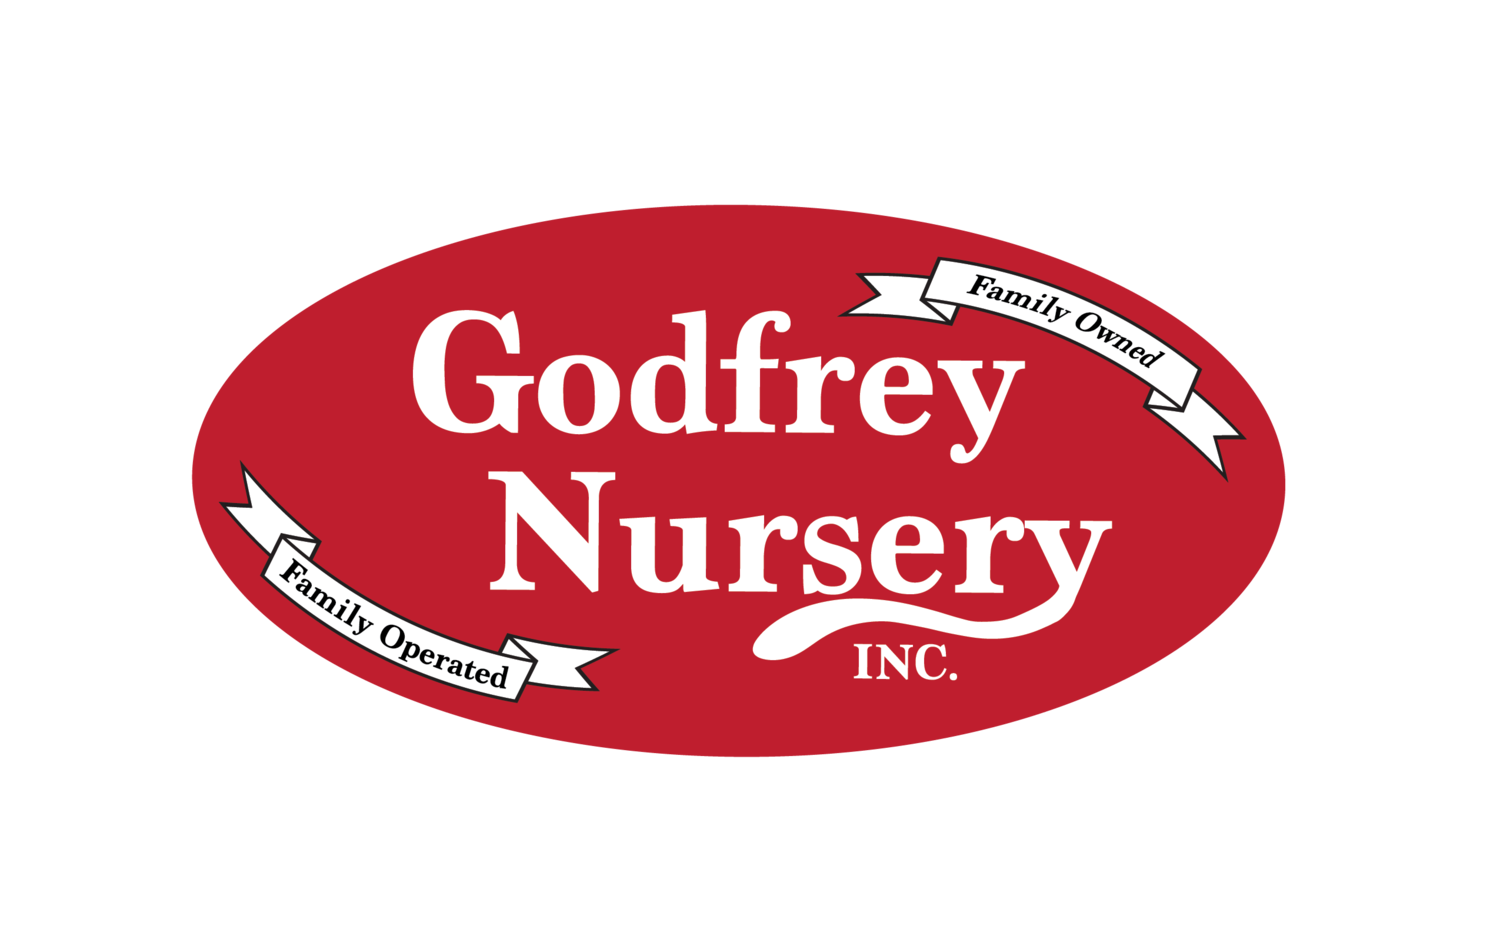 Godfrey Nursery Inc.